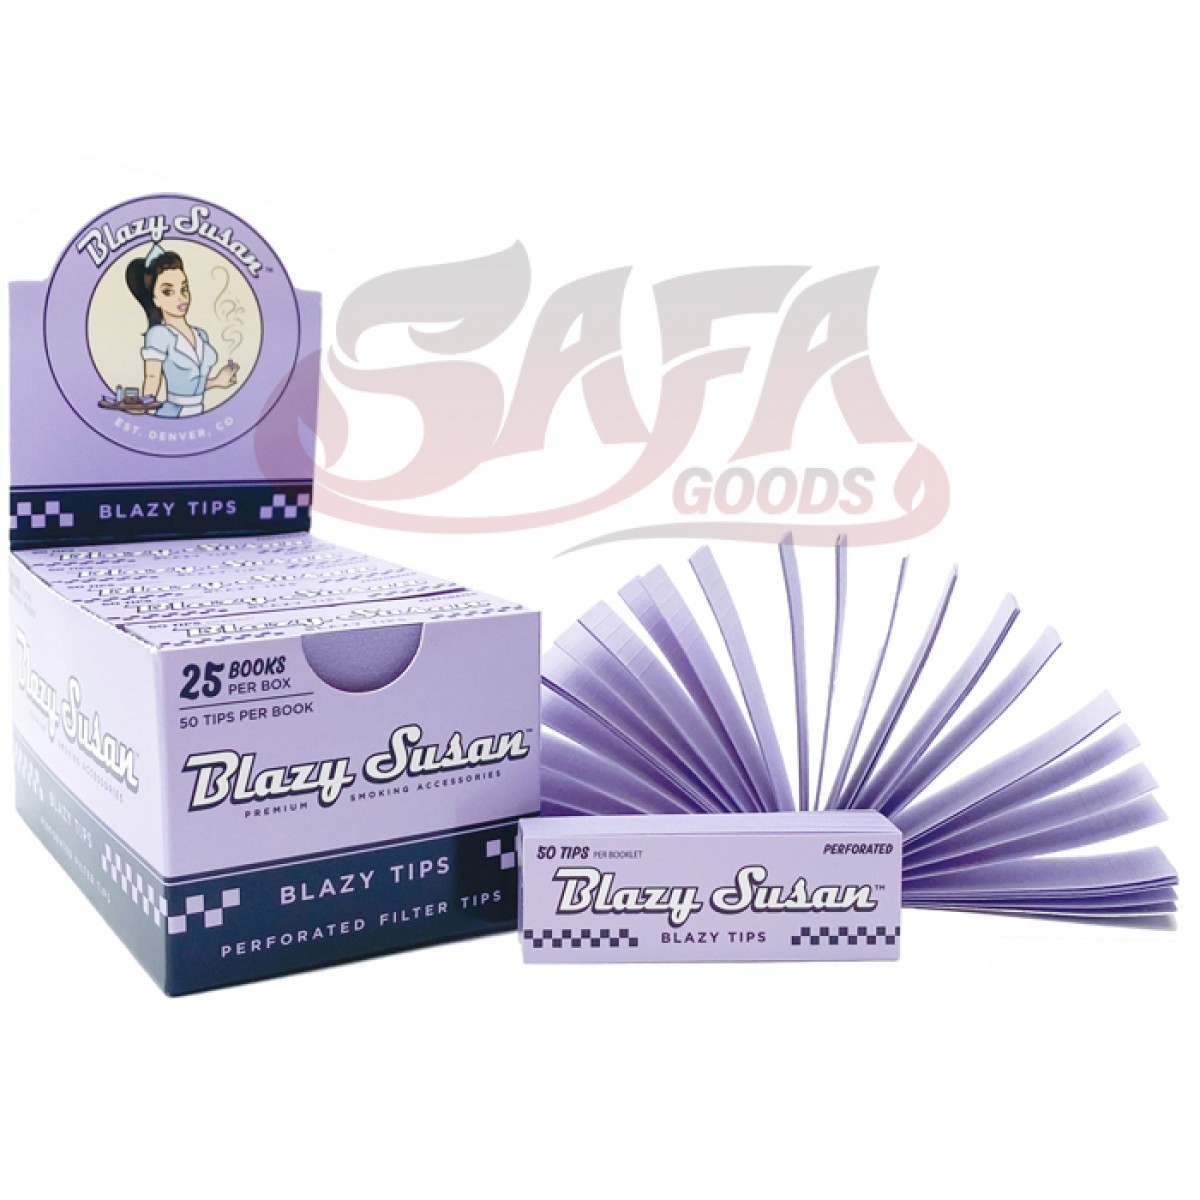 Blazy Susan - Filter Tips - 25CT BOX